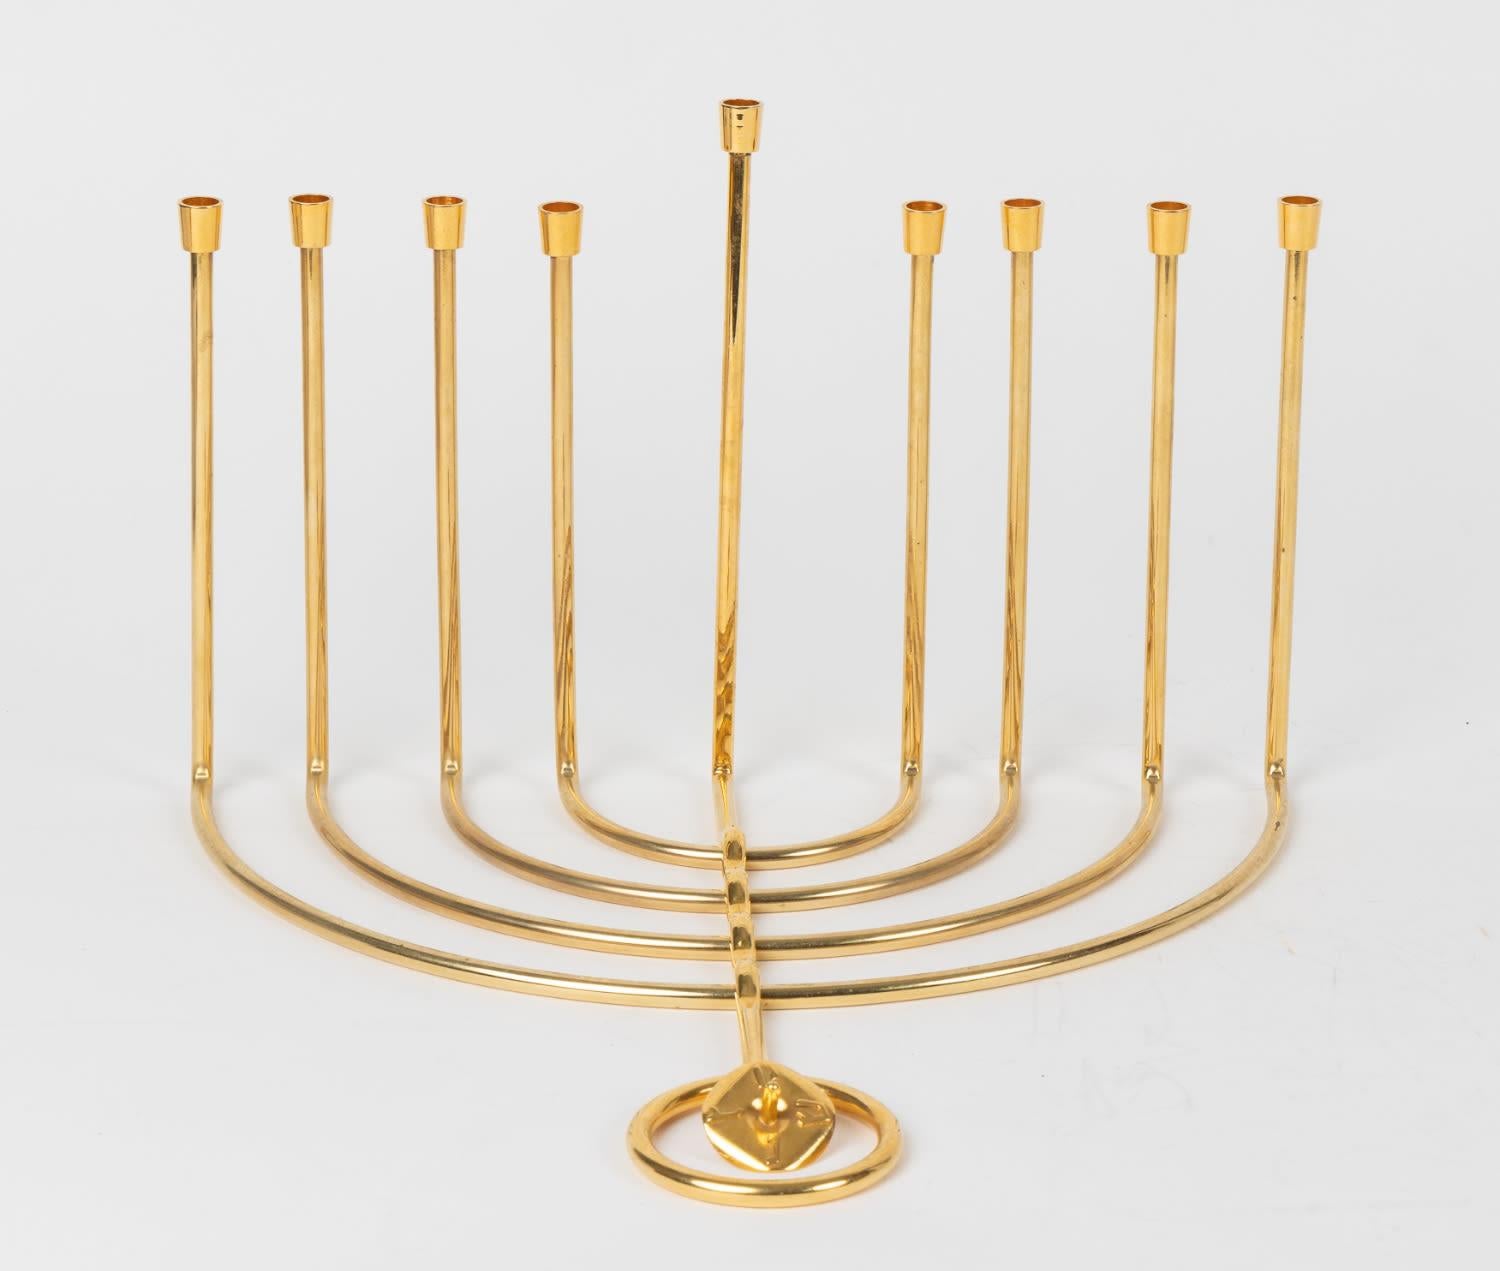 Late 20th Century A Unique Chanukkiah of gilt brass, by the Foremost Israeli Artist Moshe Zabari